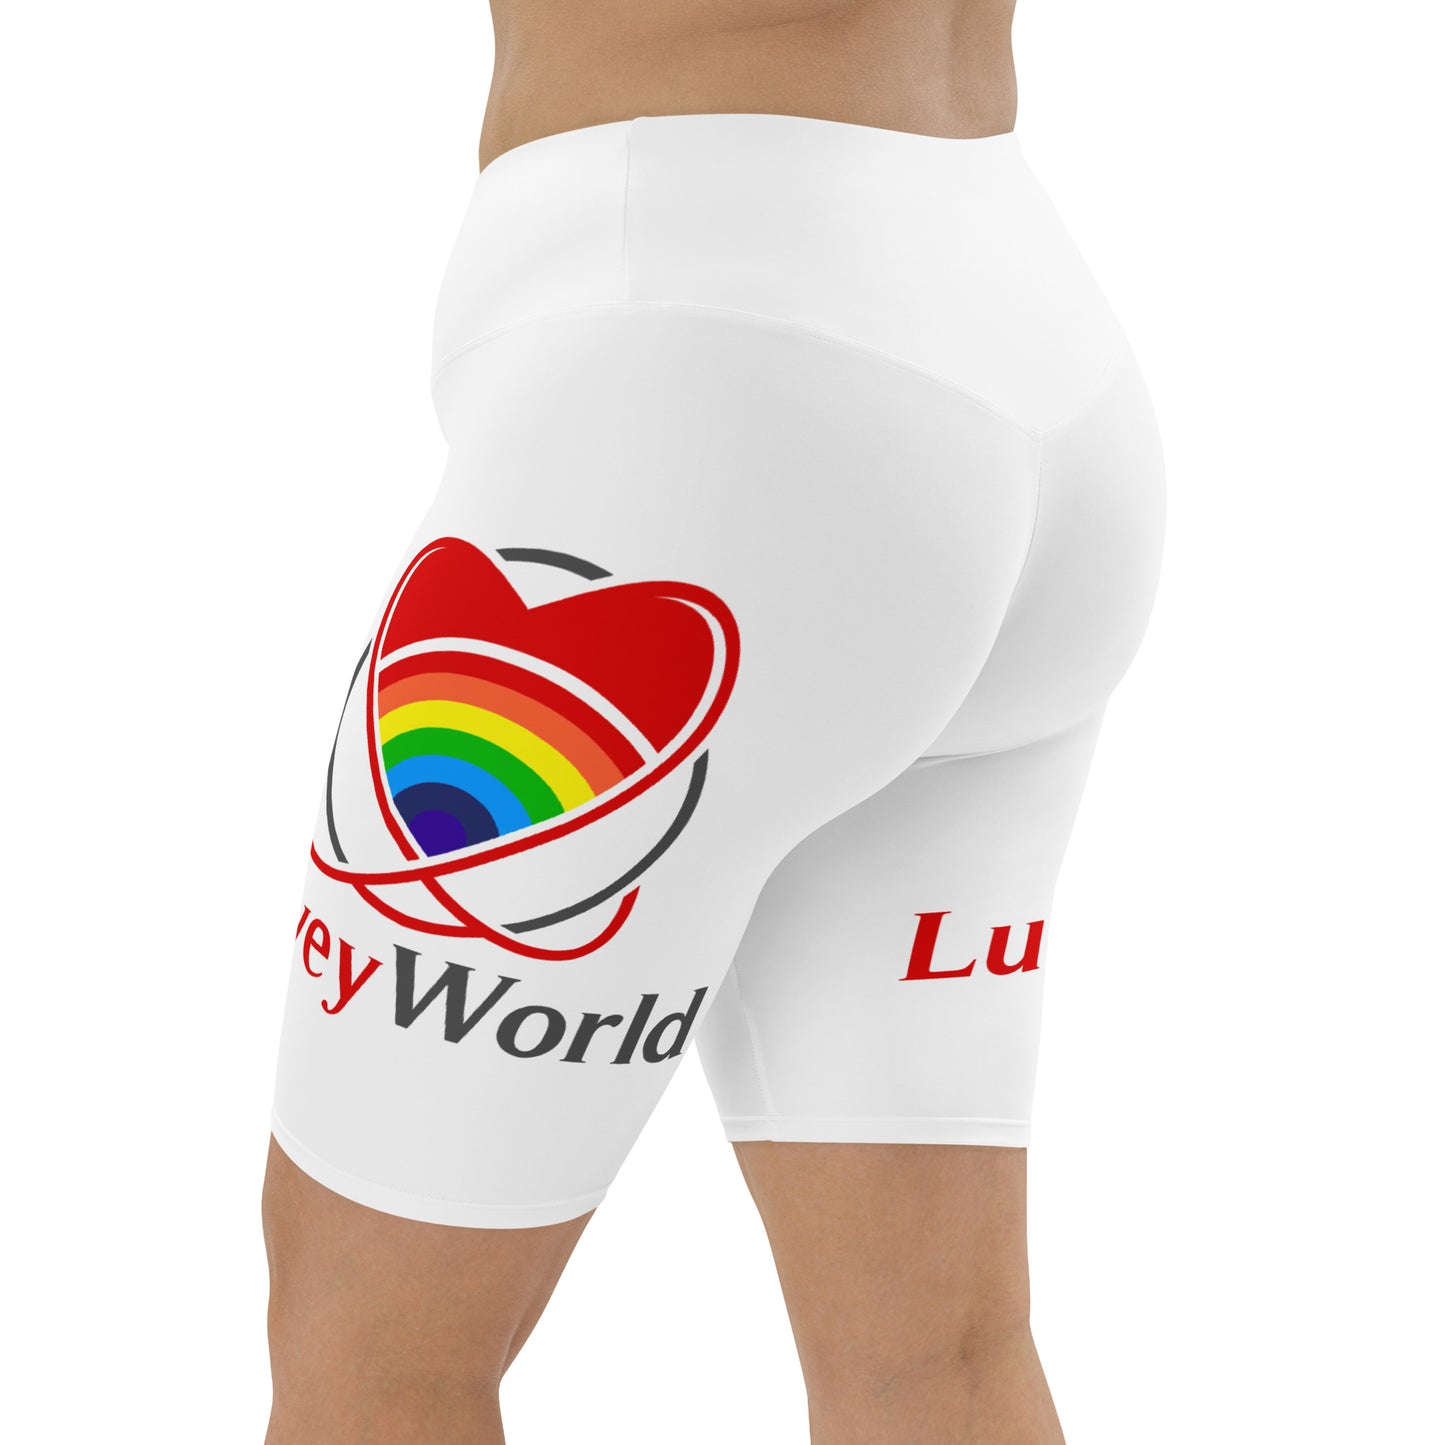 LuveyWorld leg logo Biker Shorts